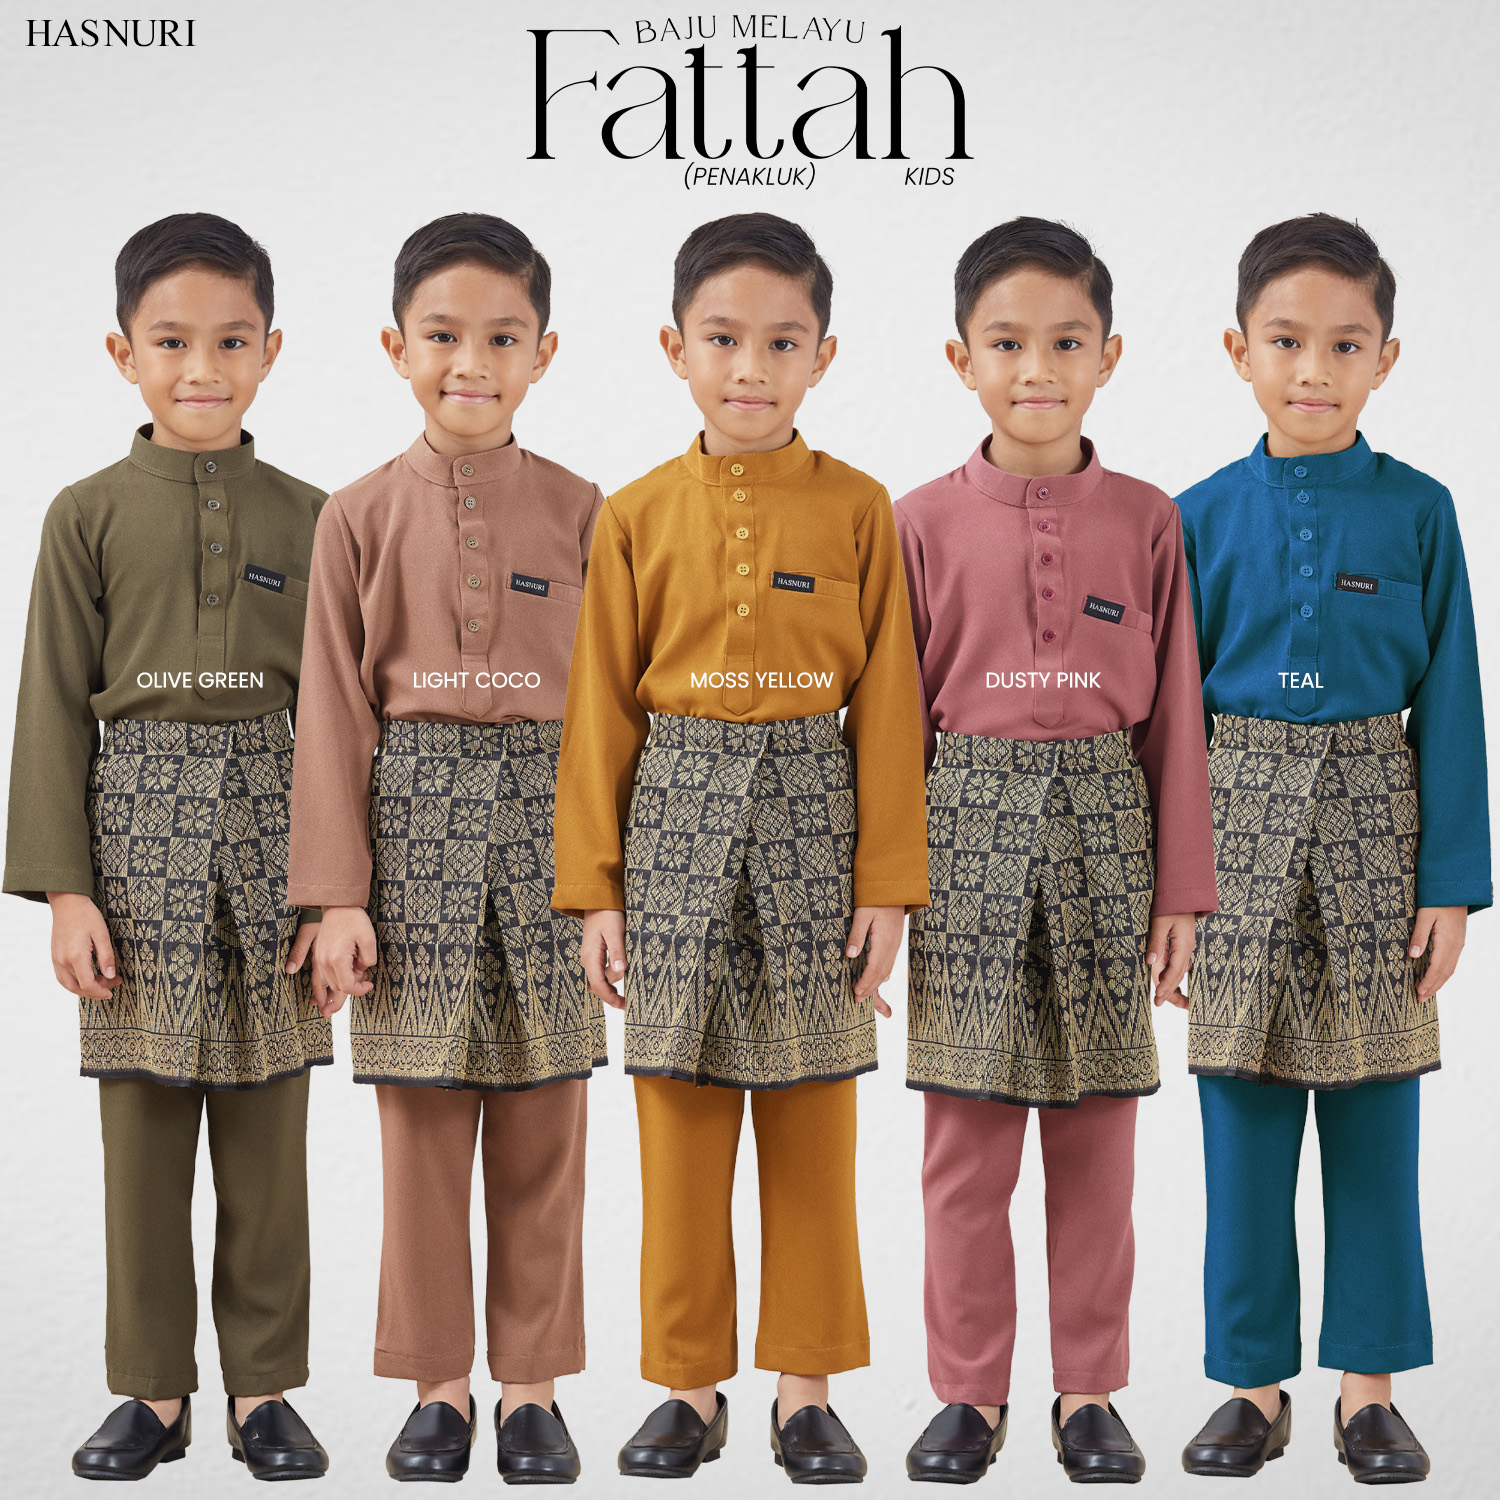 Baju Melayu Fattah Kids - Teal